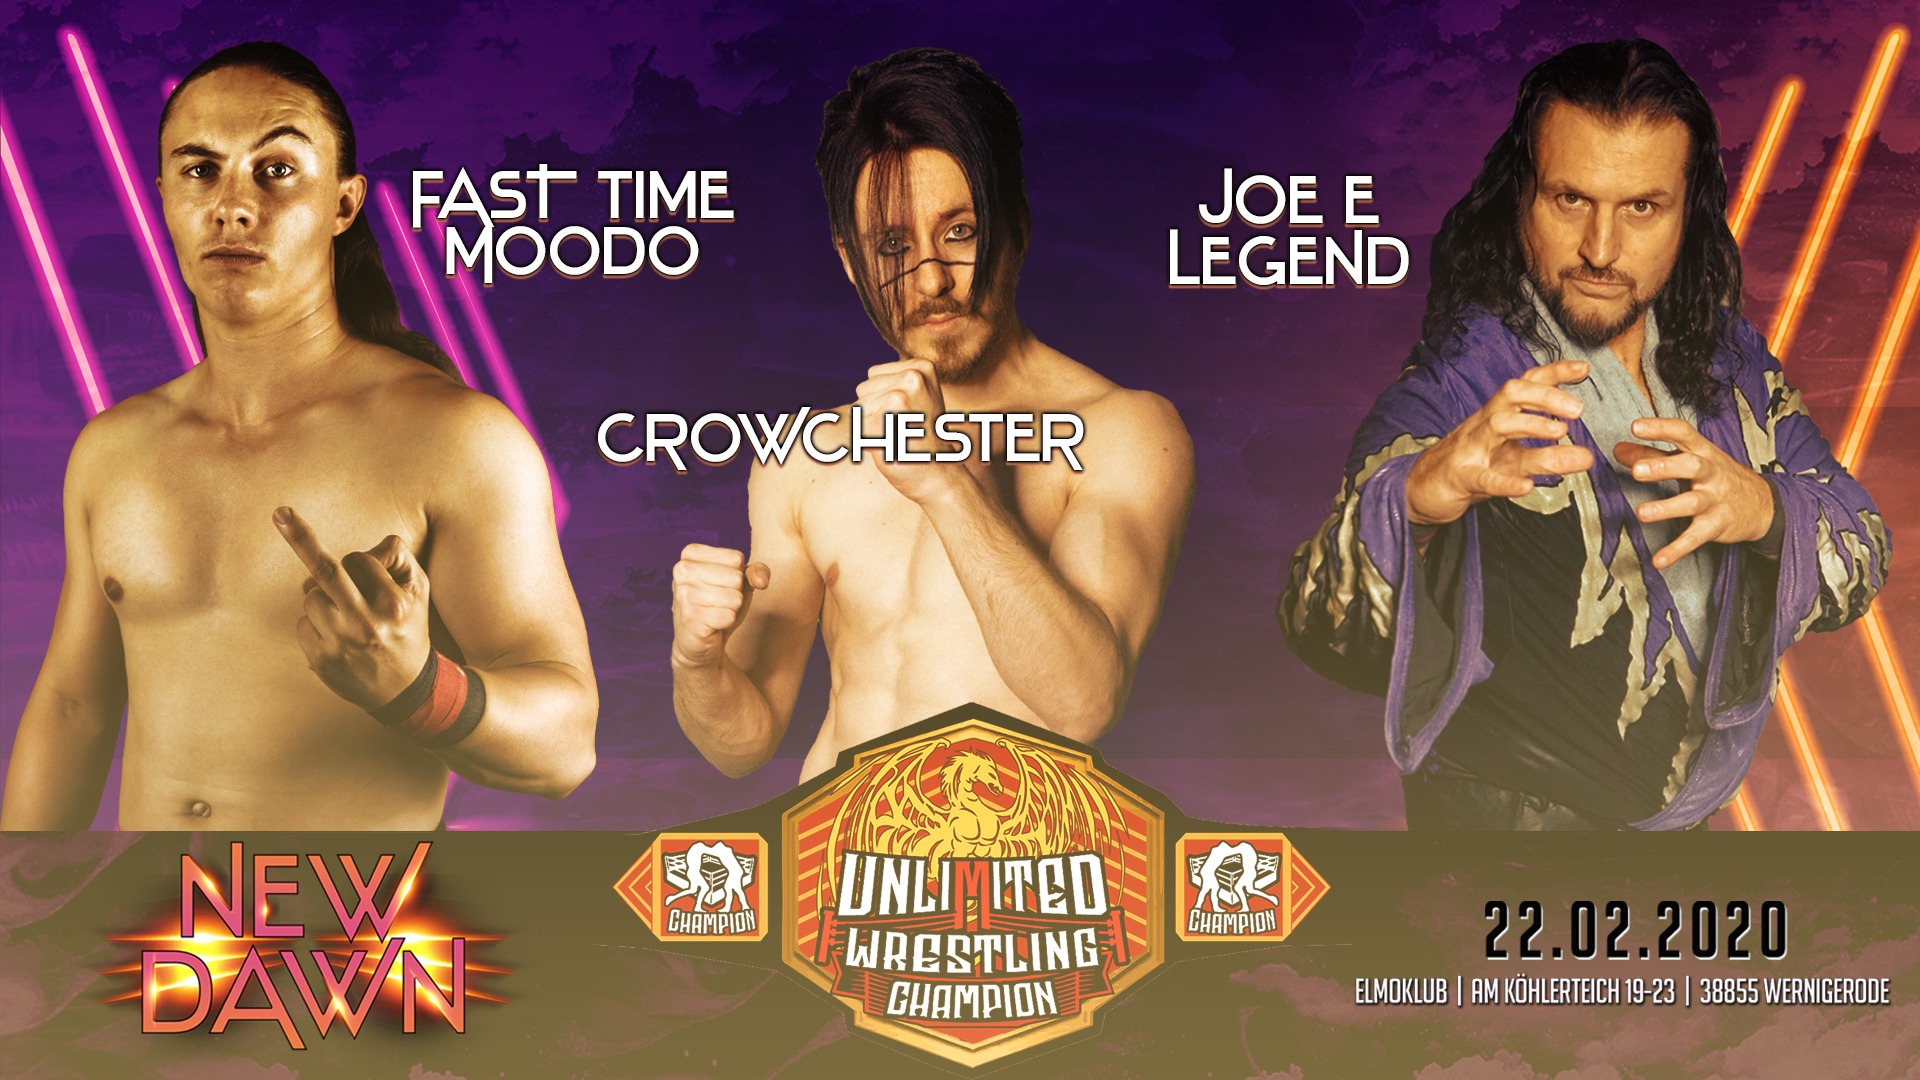 Unlimited Championship Triple Threat MatchFast Time Moodo vs. Joe E Legend vs. Crowchester